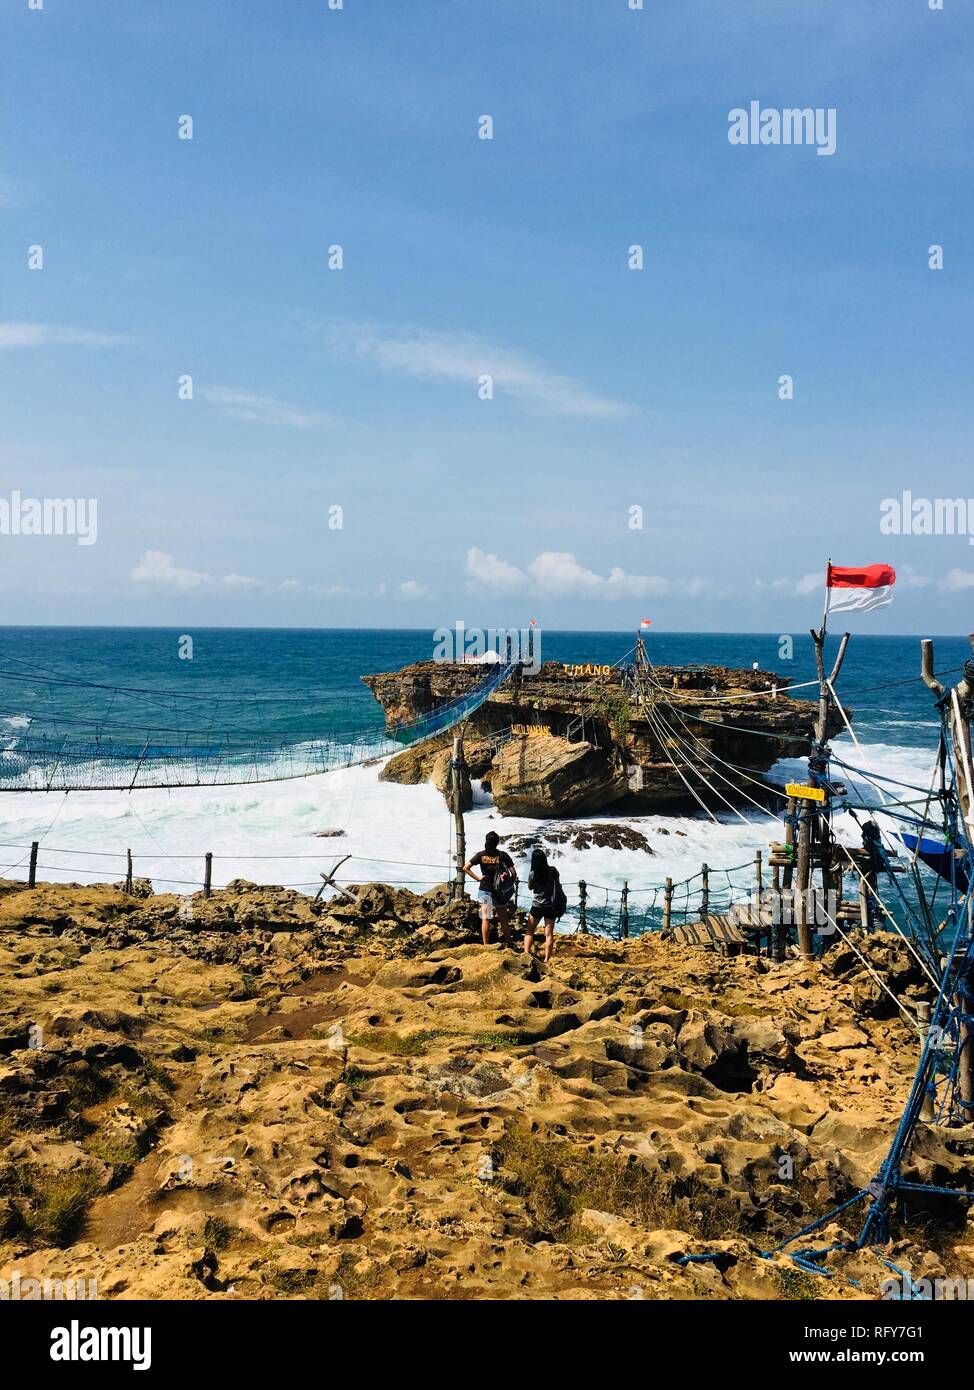 Pantai Timang Jogjakarta Java Island Indonesia Stock Photo